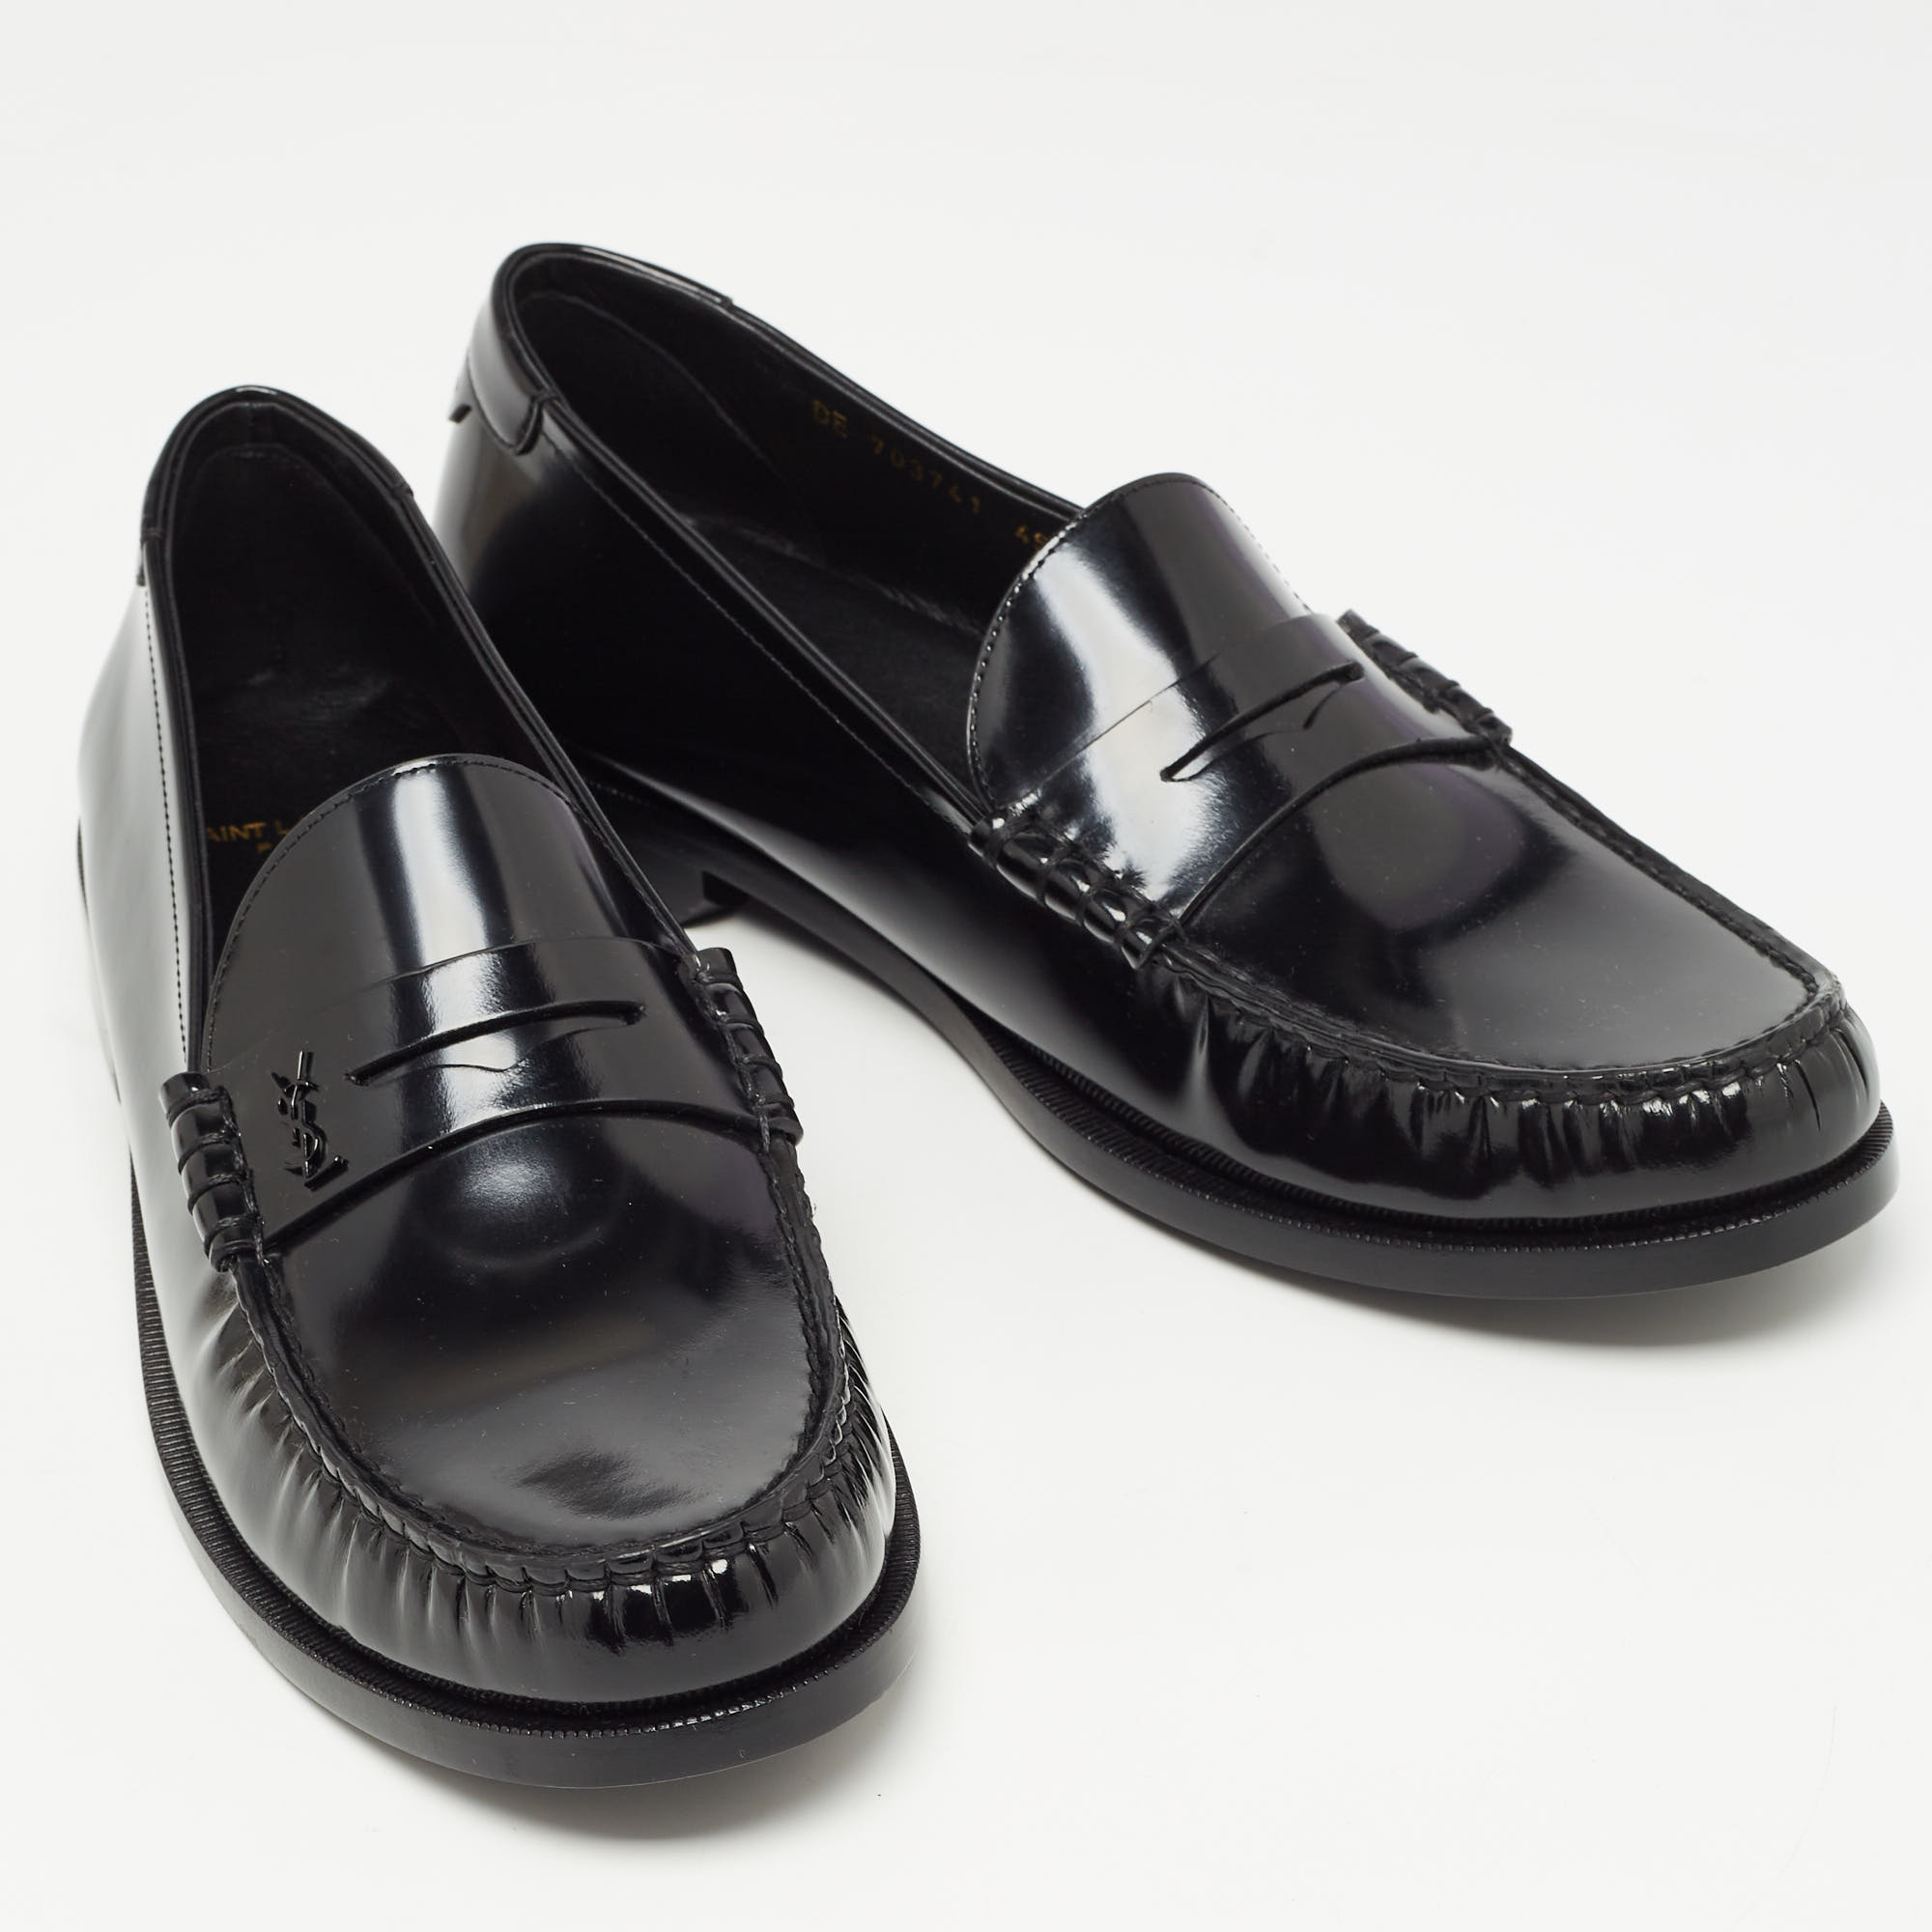 Saint Laurent Black Leather Penny Loafers Size 45